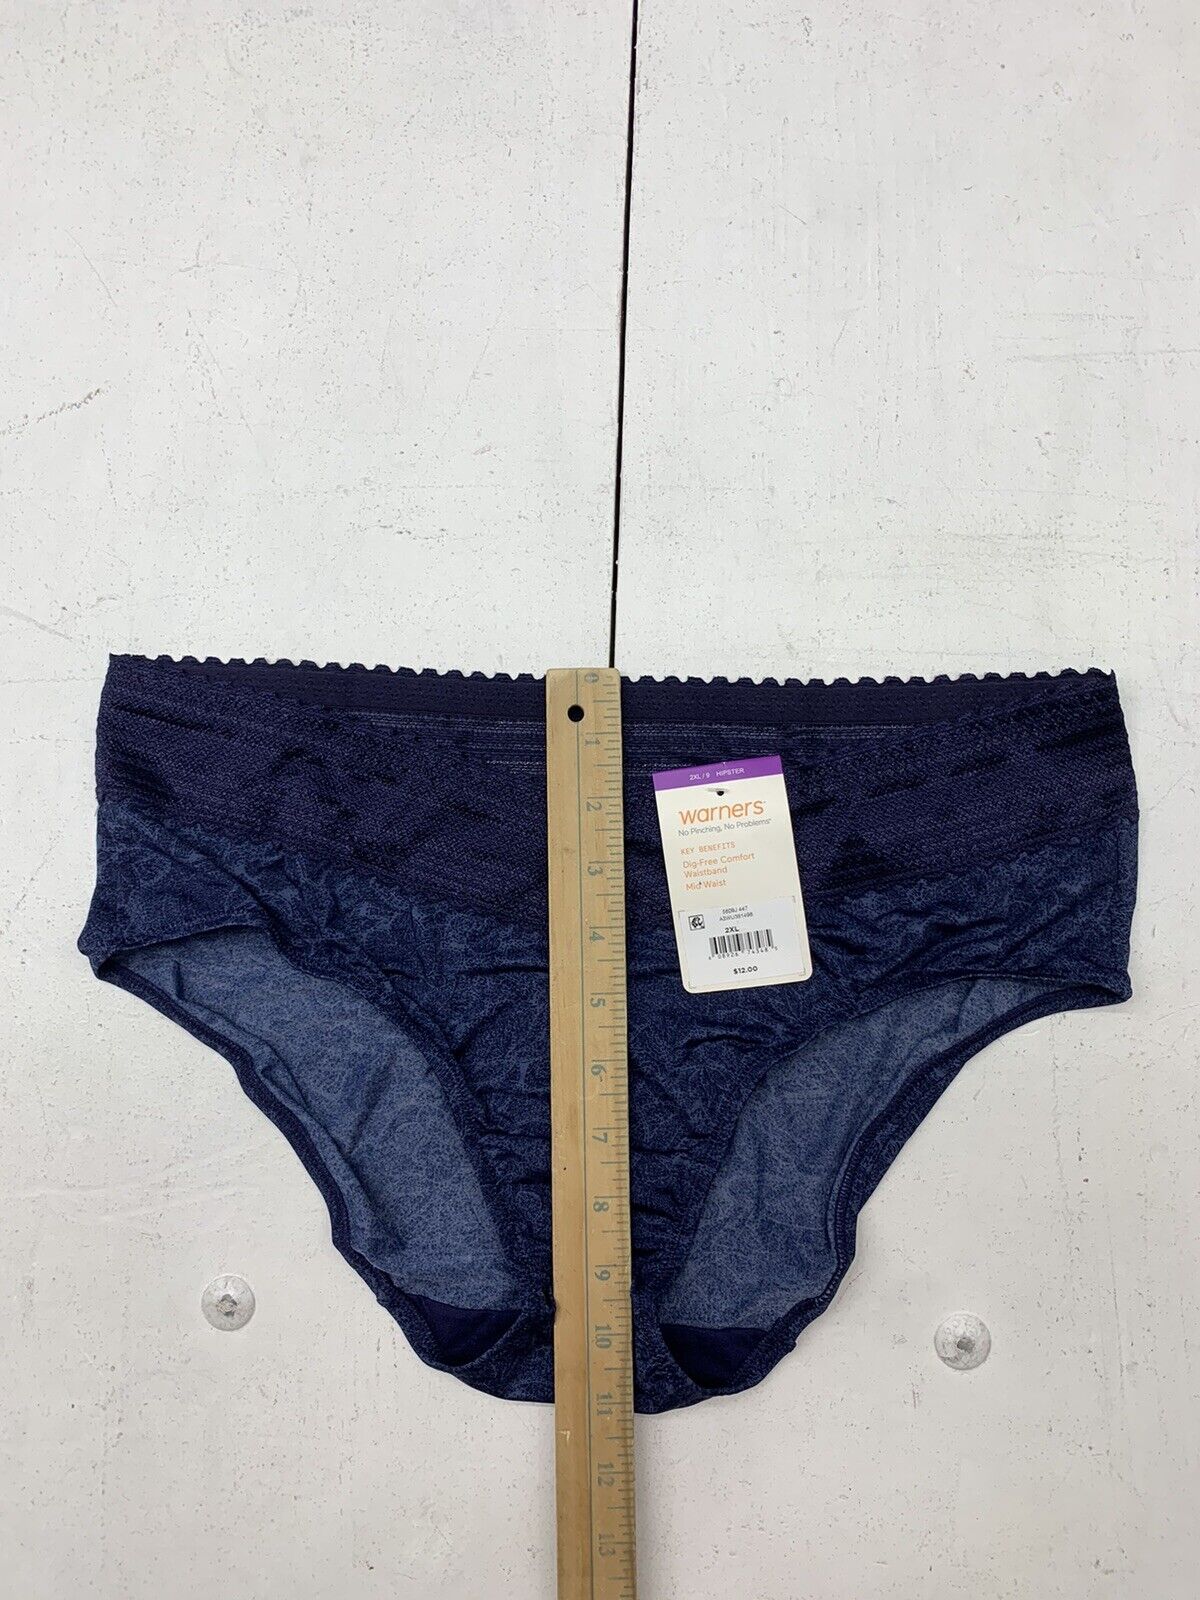 Warners Womens Dark Blue Hipster Panties Size 2XL - beyond exchange